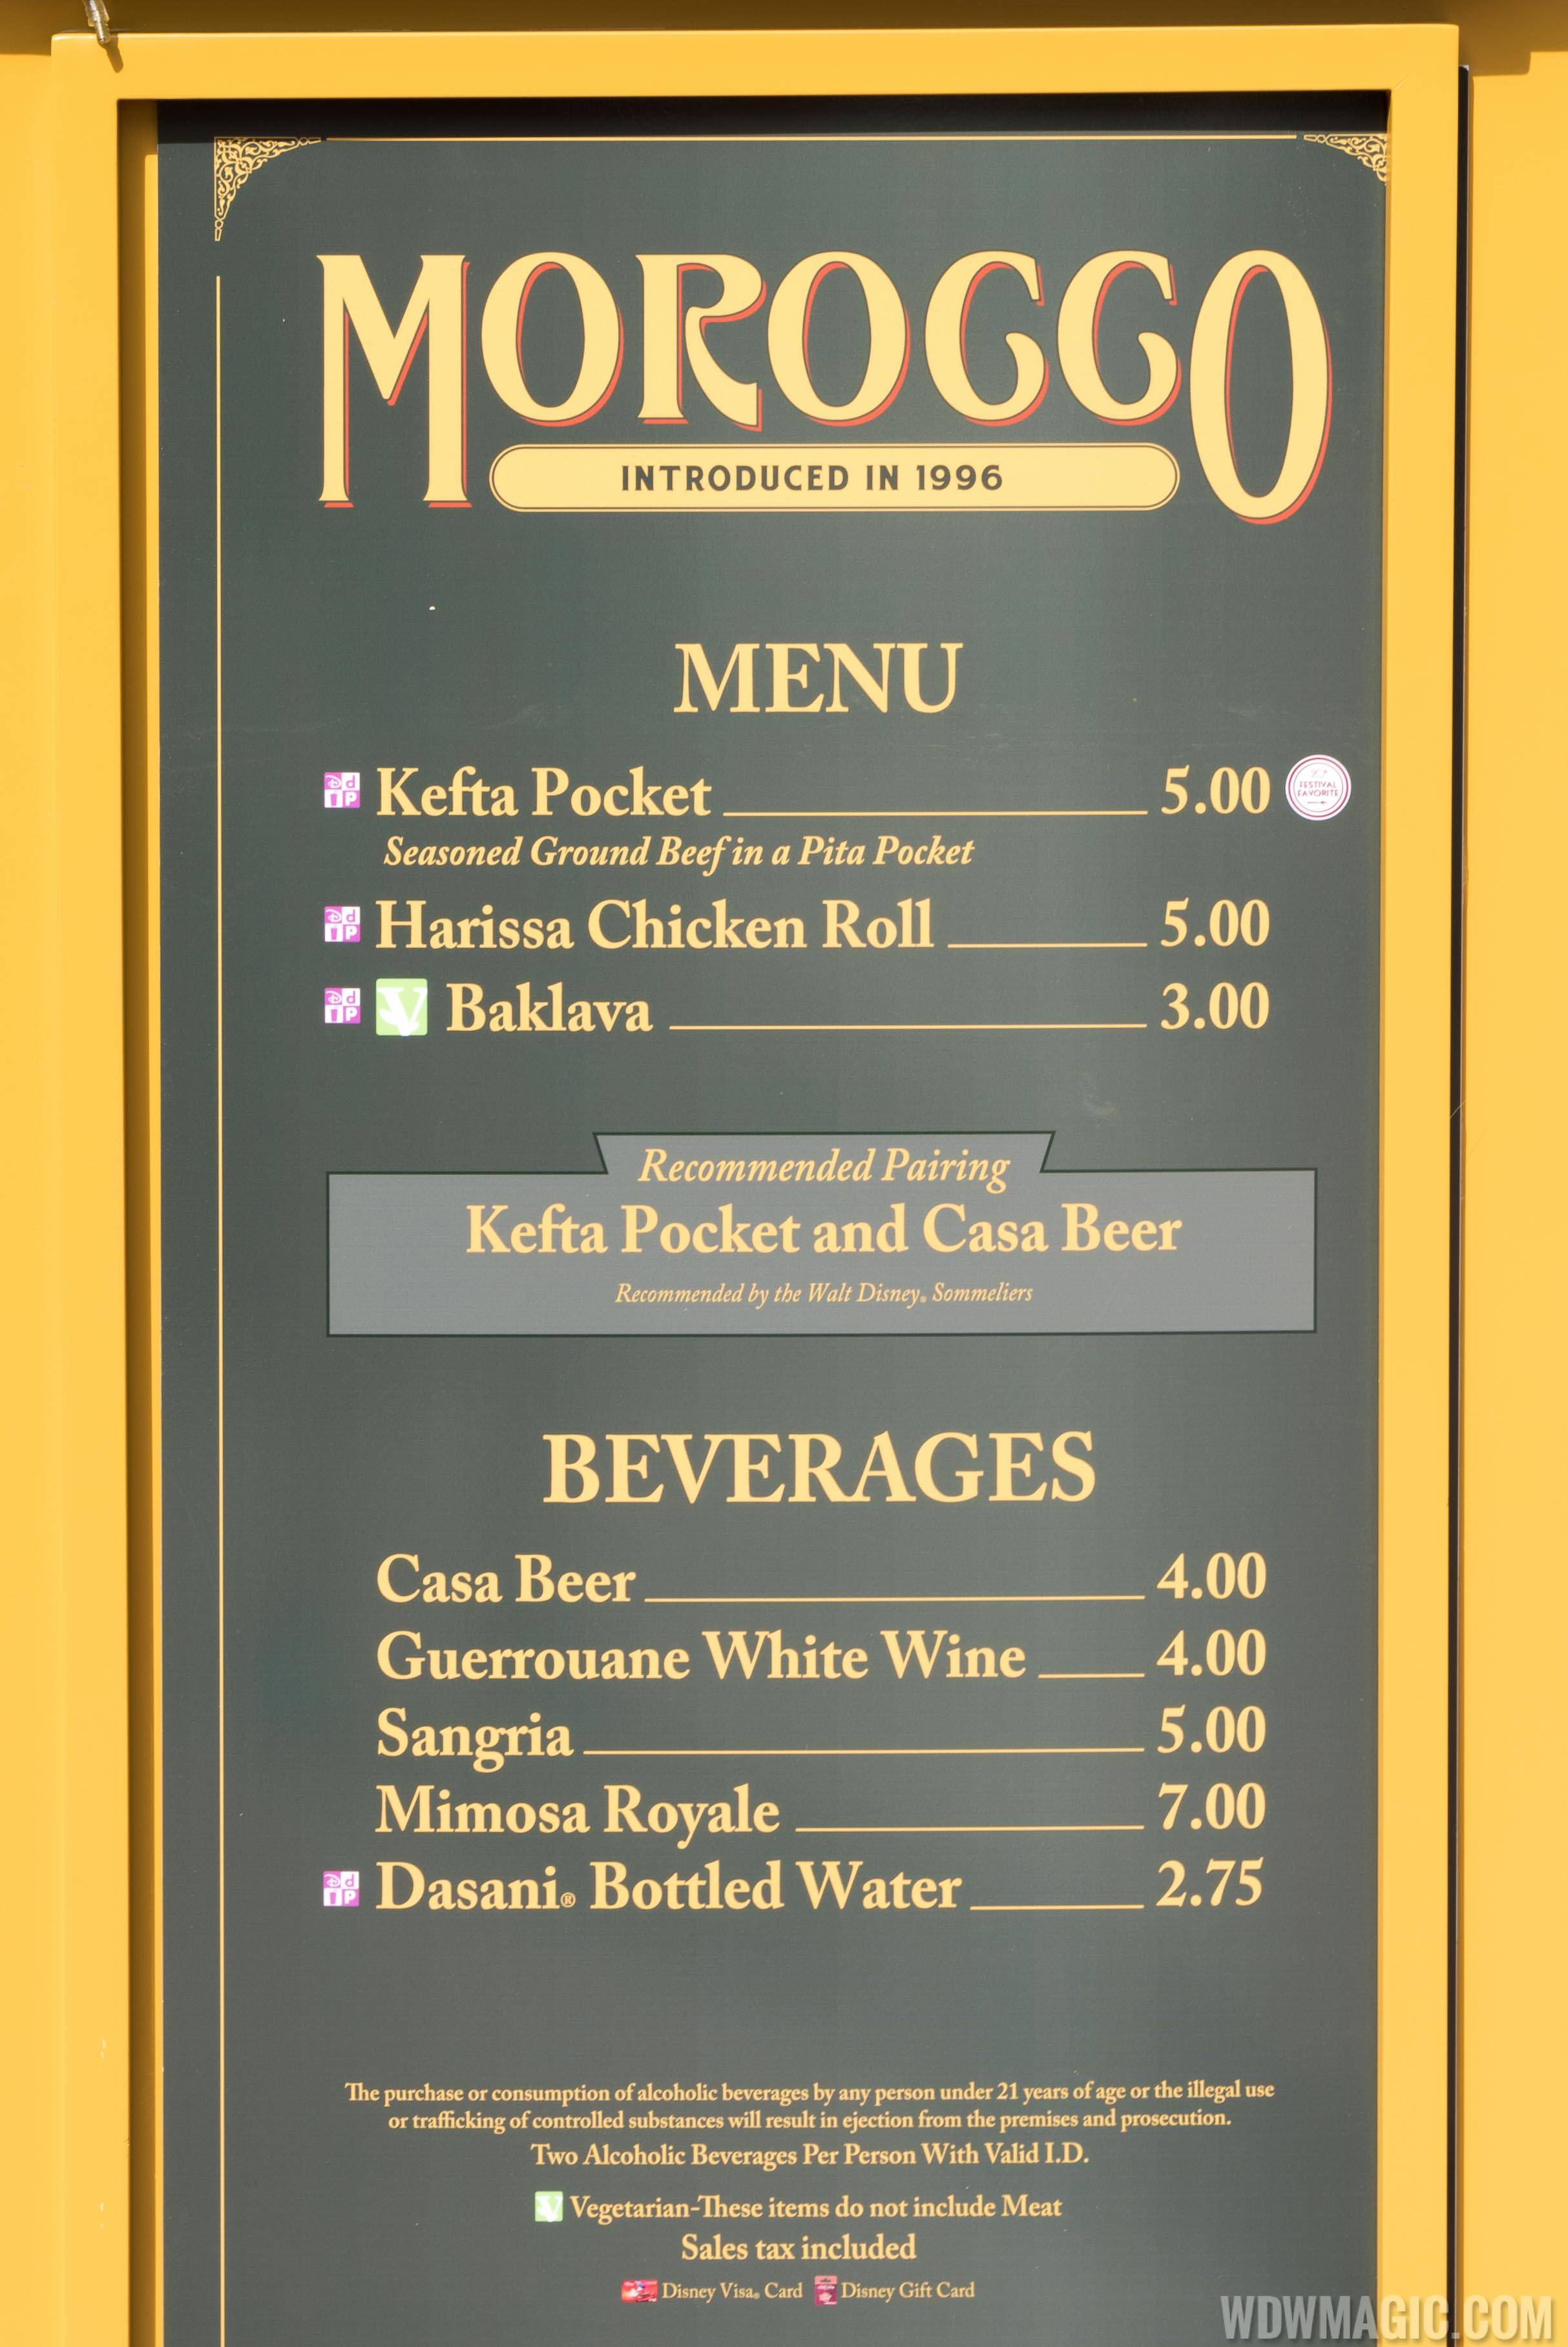 2015 Epcot Food and Wine Festival Marketplace kiosk - Morocco menu